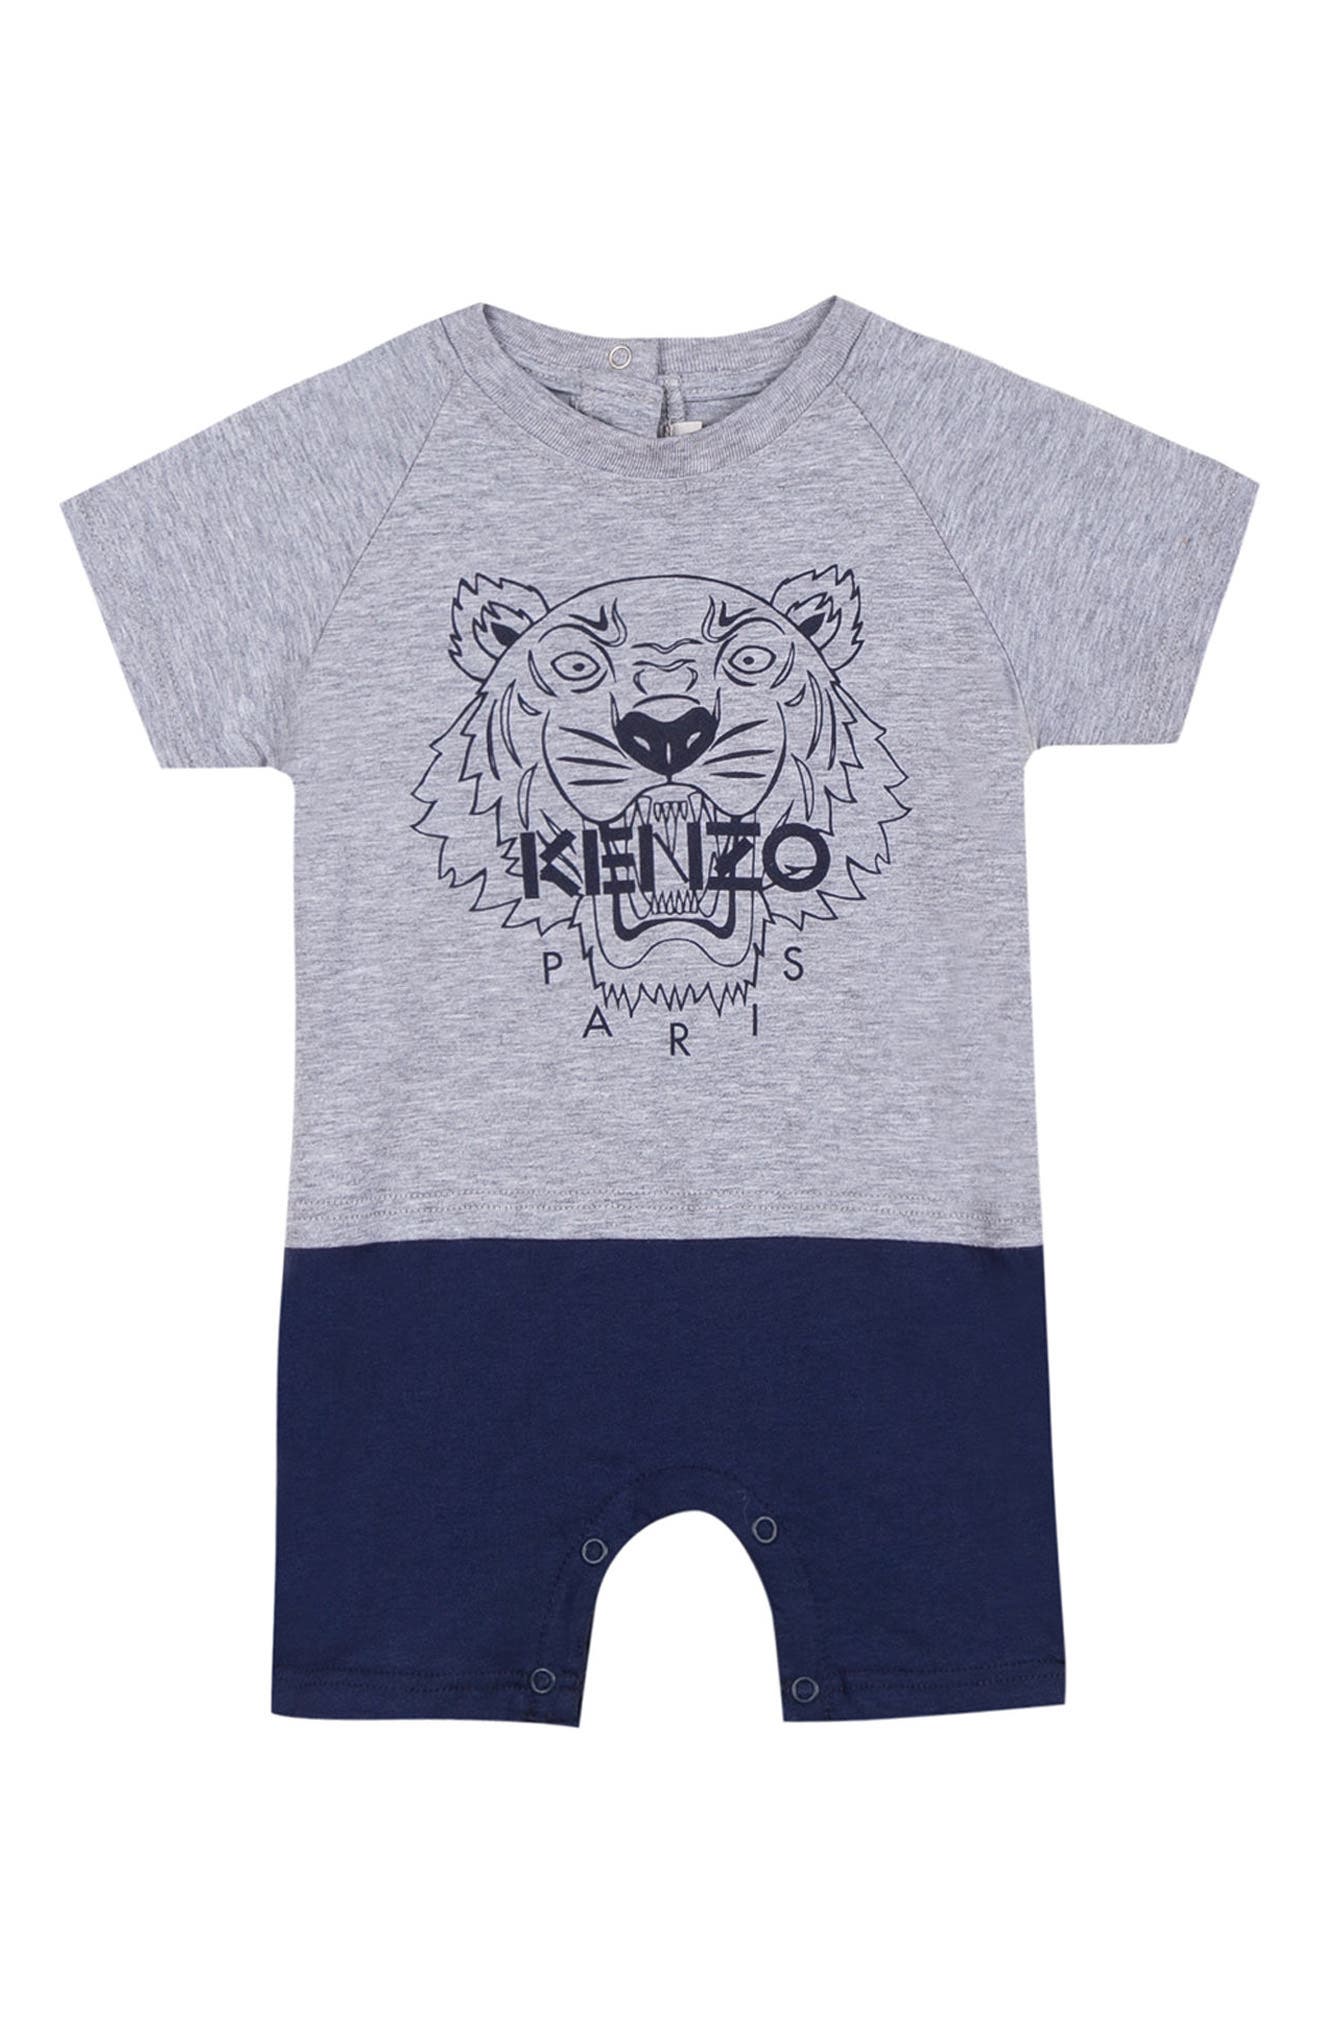 kenzo baby boy clothes